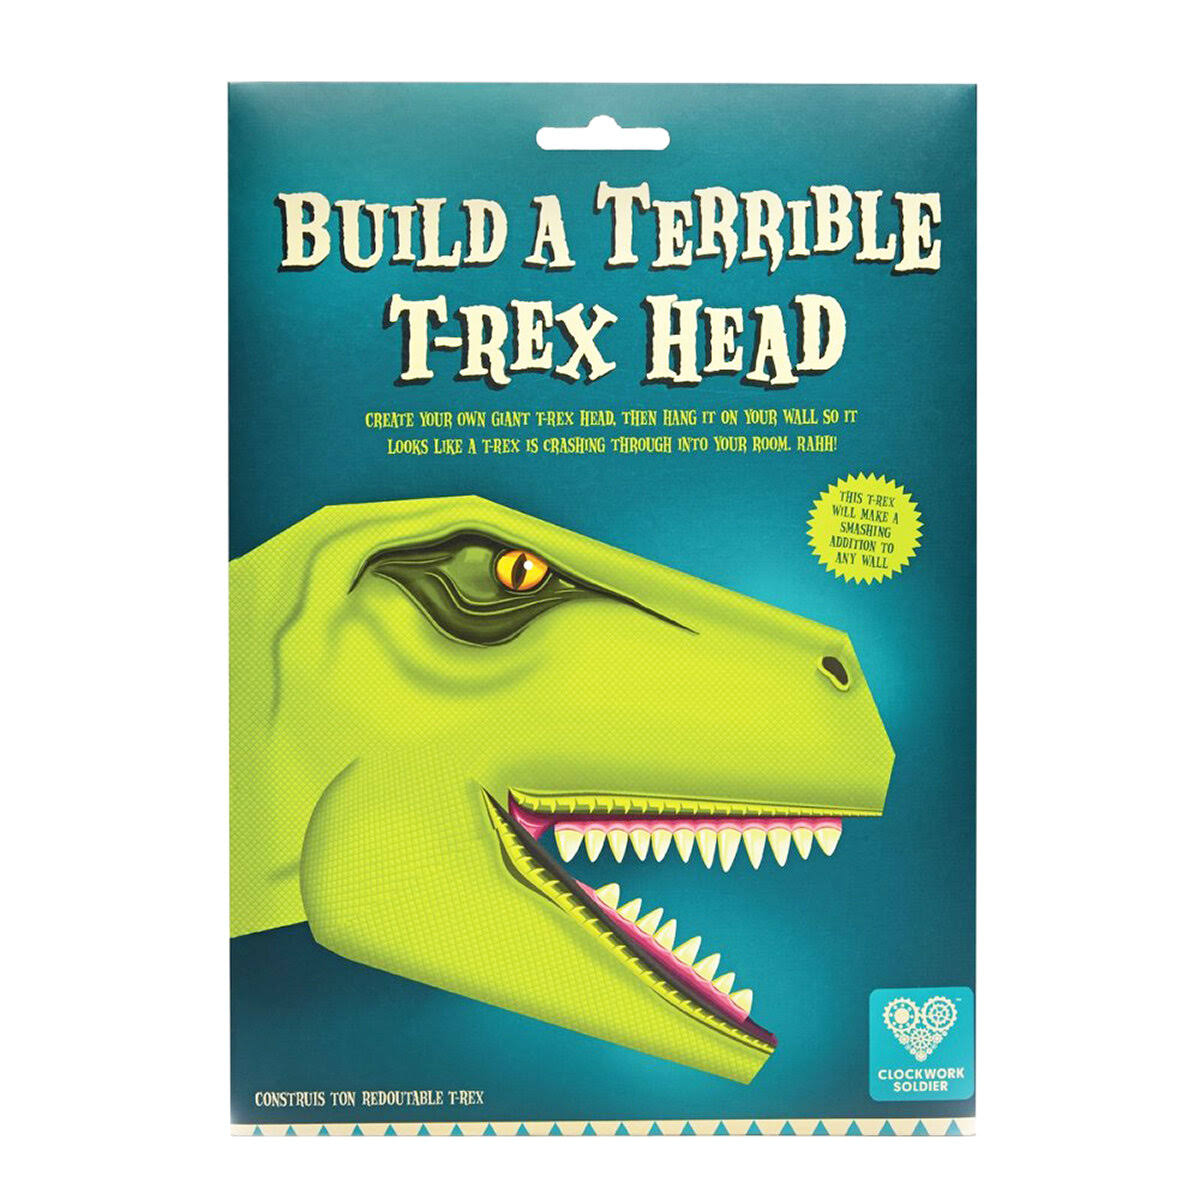 Build a Terrible T-rex Head - Clockwork Soldier